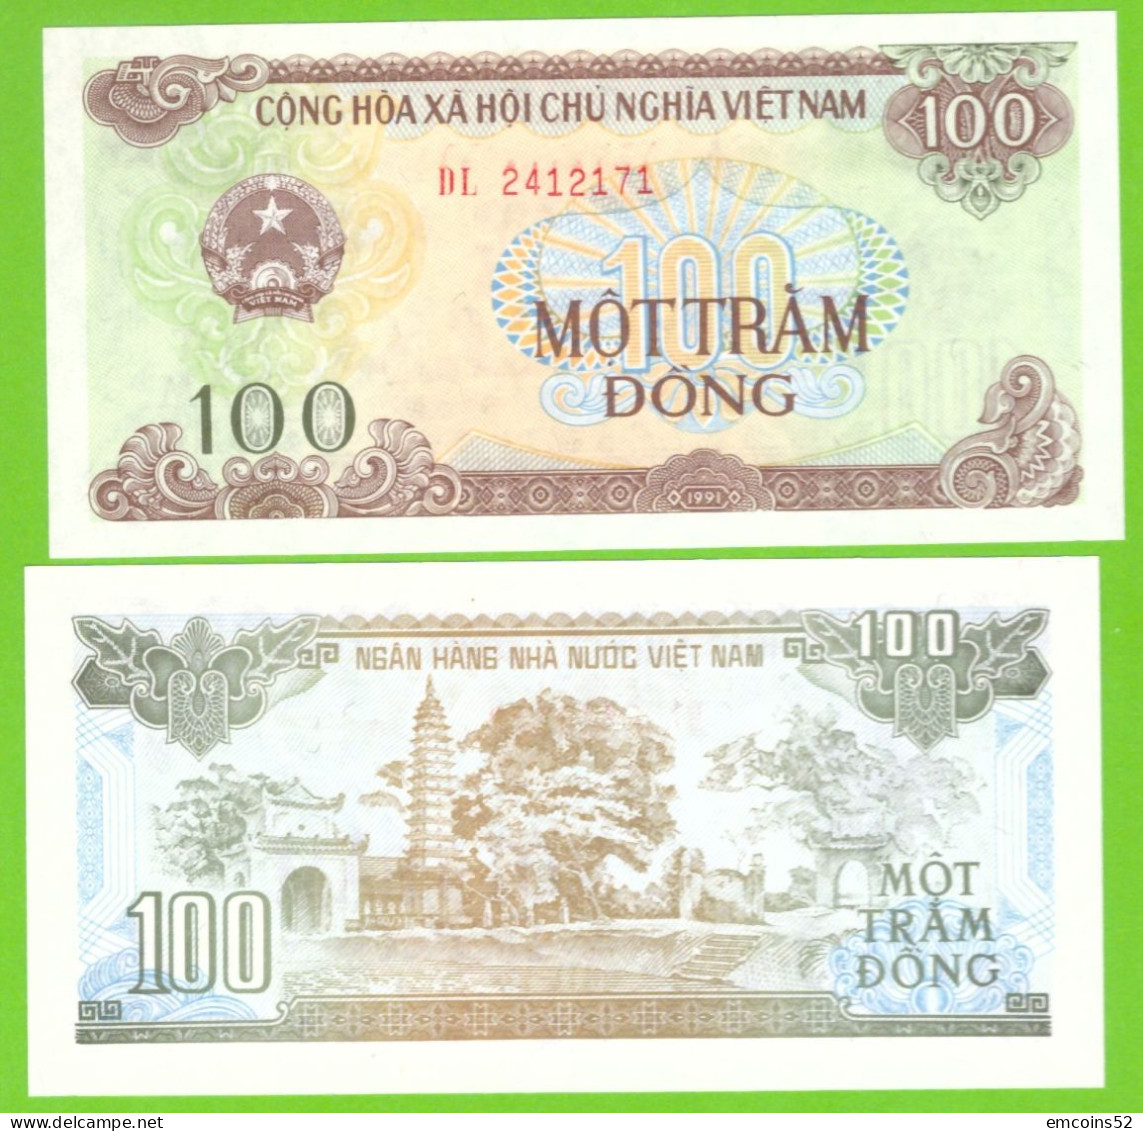 VIETNAM 100 DONG 1991 P-105 UNC - Vietnam